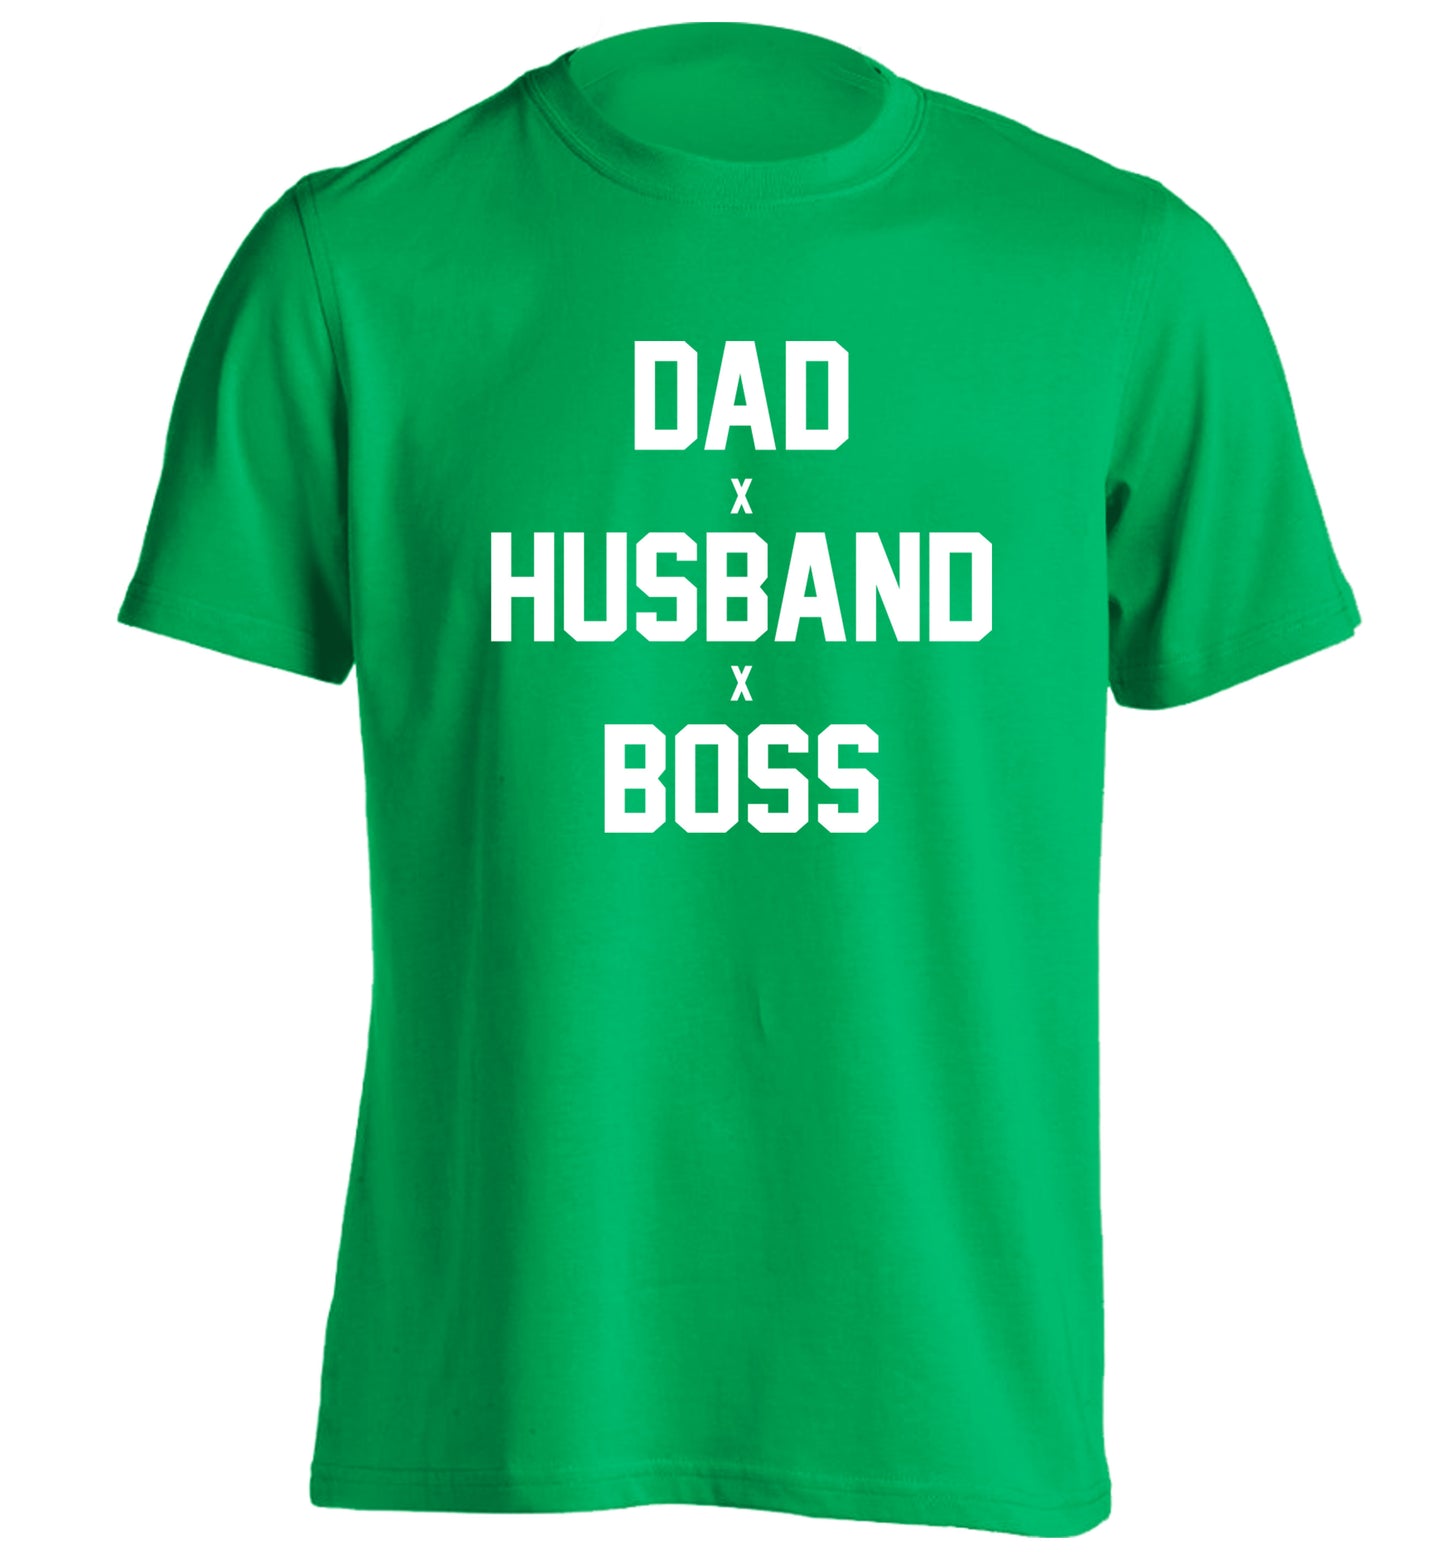 Dad husband boss adults unisex green Tshirt 2XL